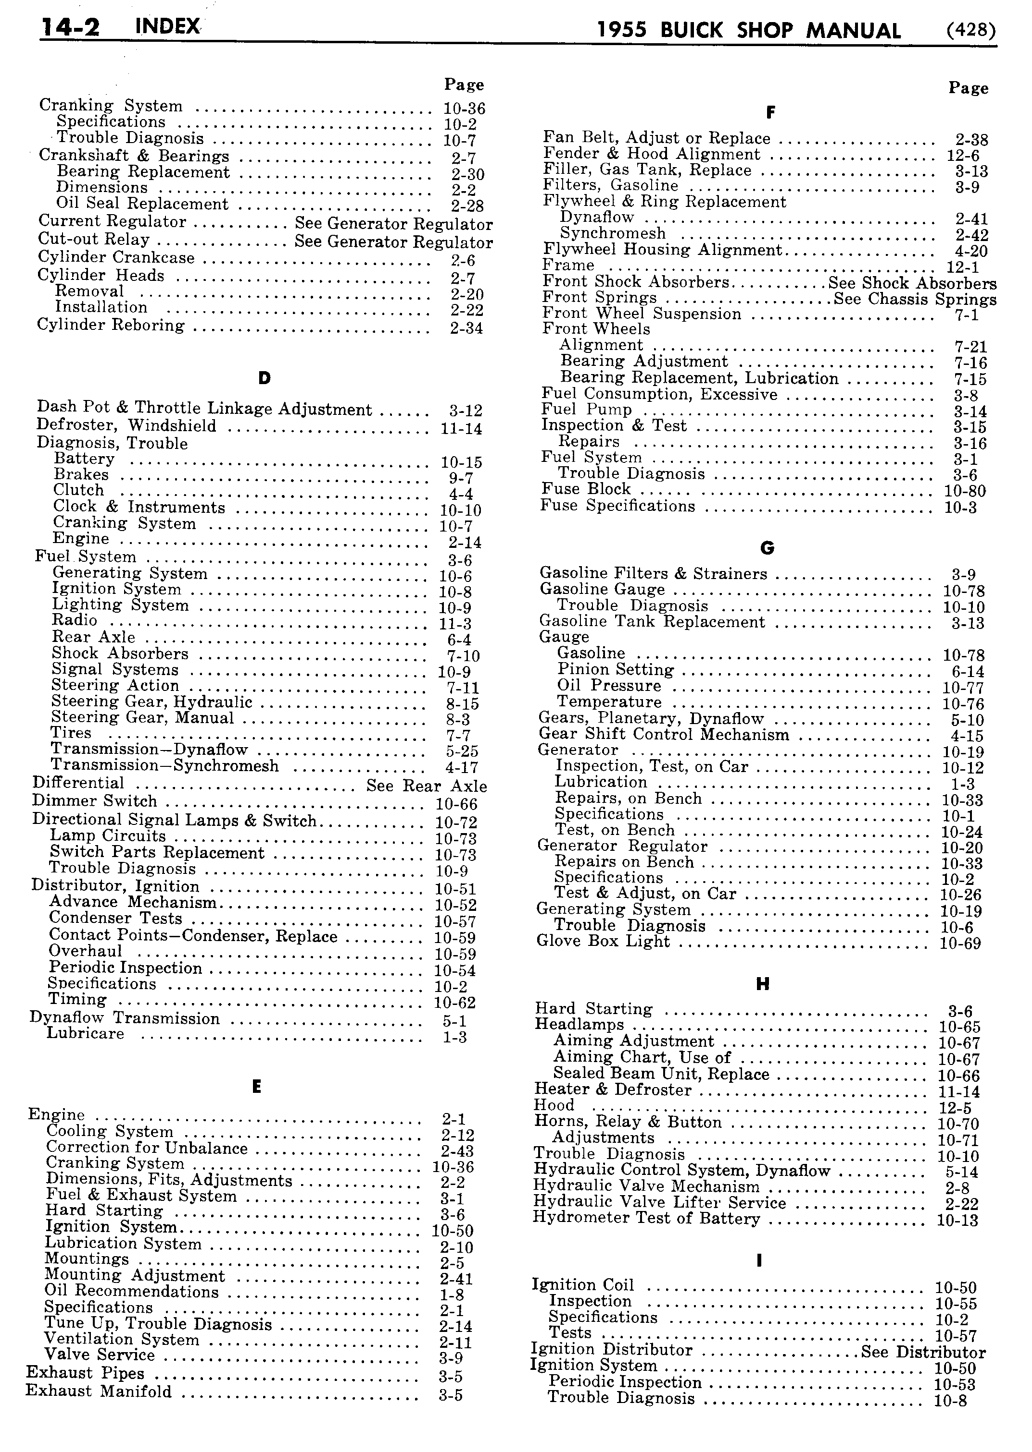 n_15 1955 Buick Shop Manual - Index-002-002.jpg